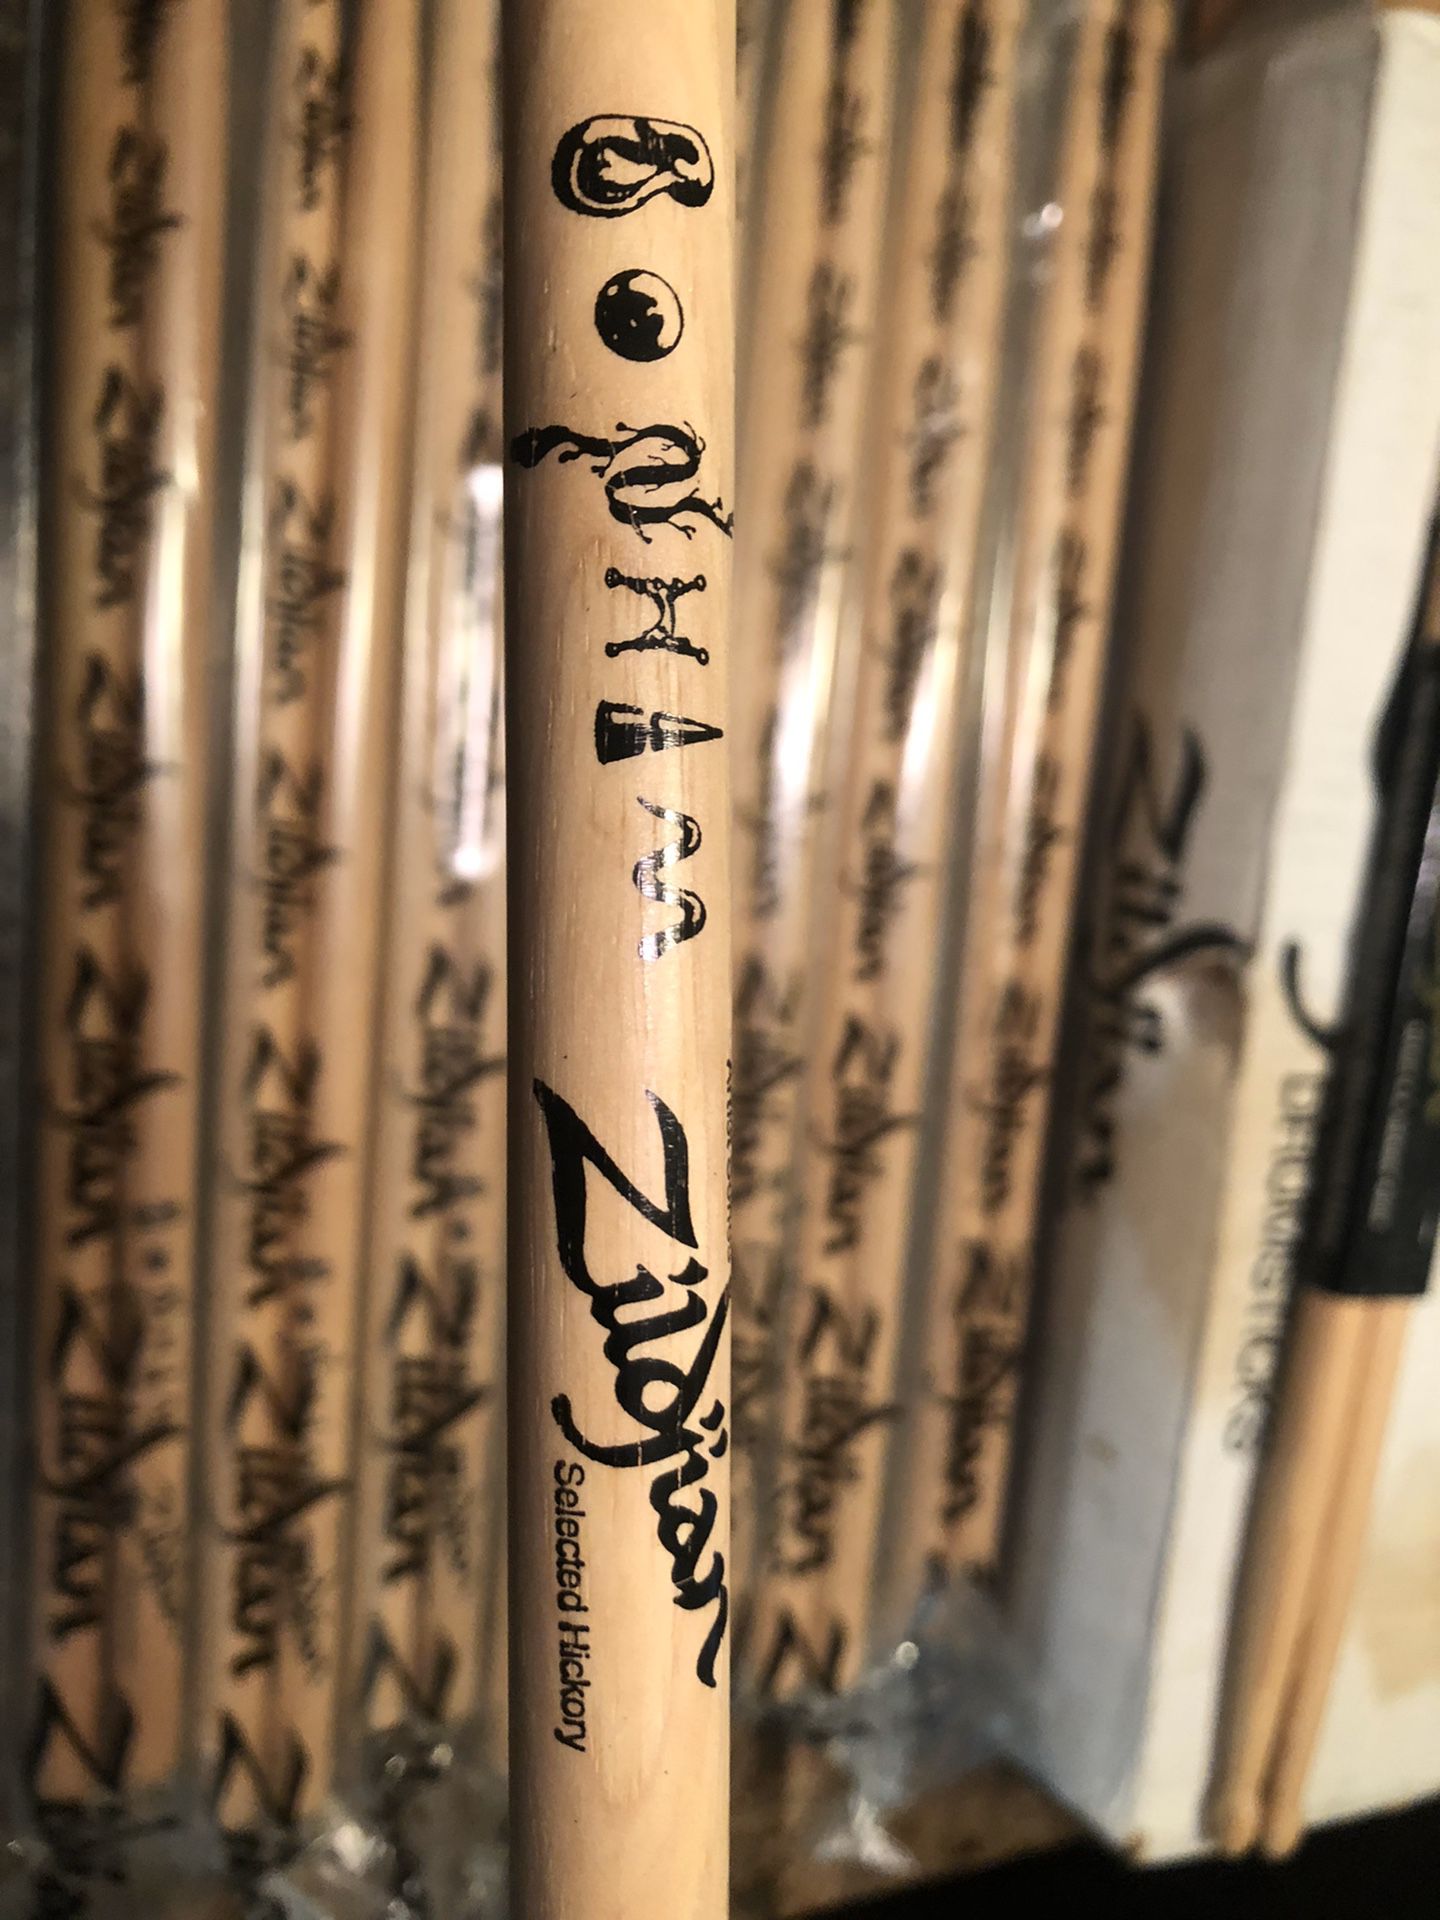 Drum Sticks Collectable Jason Bonham artist series from the mad hatter tour $25 per set